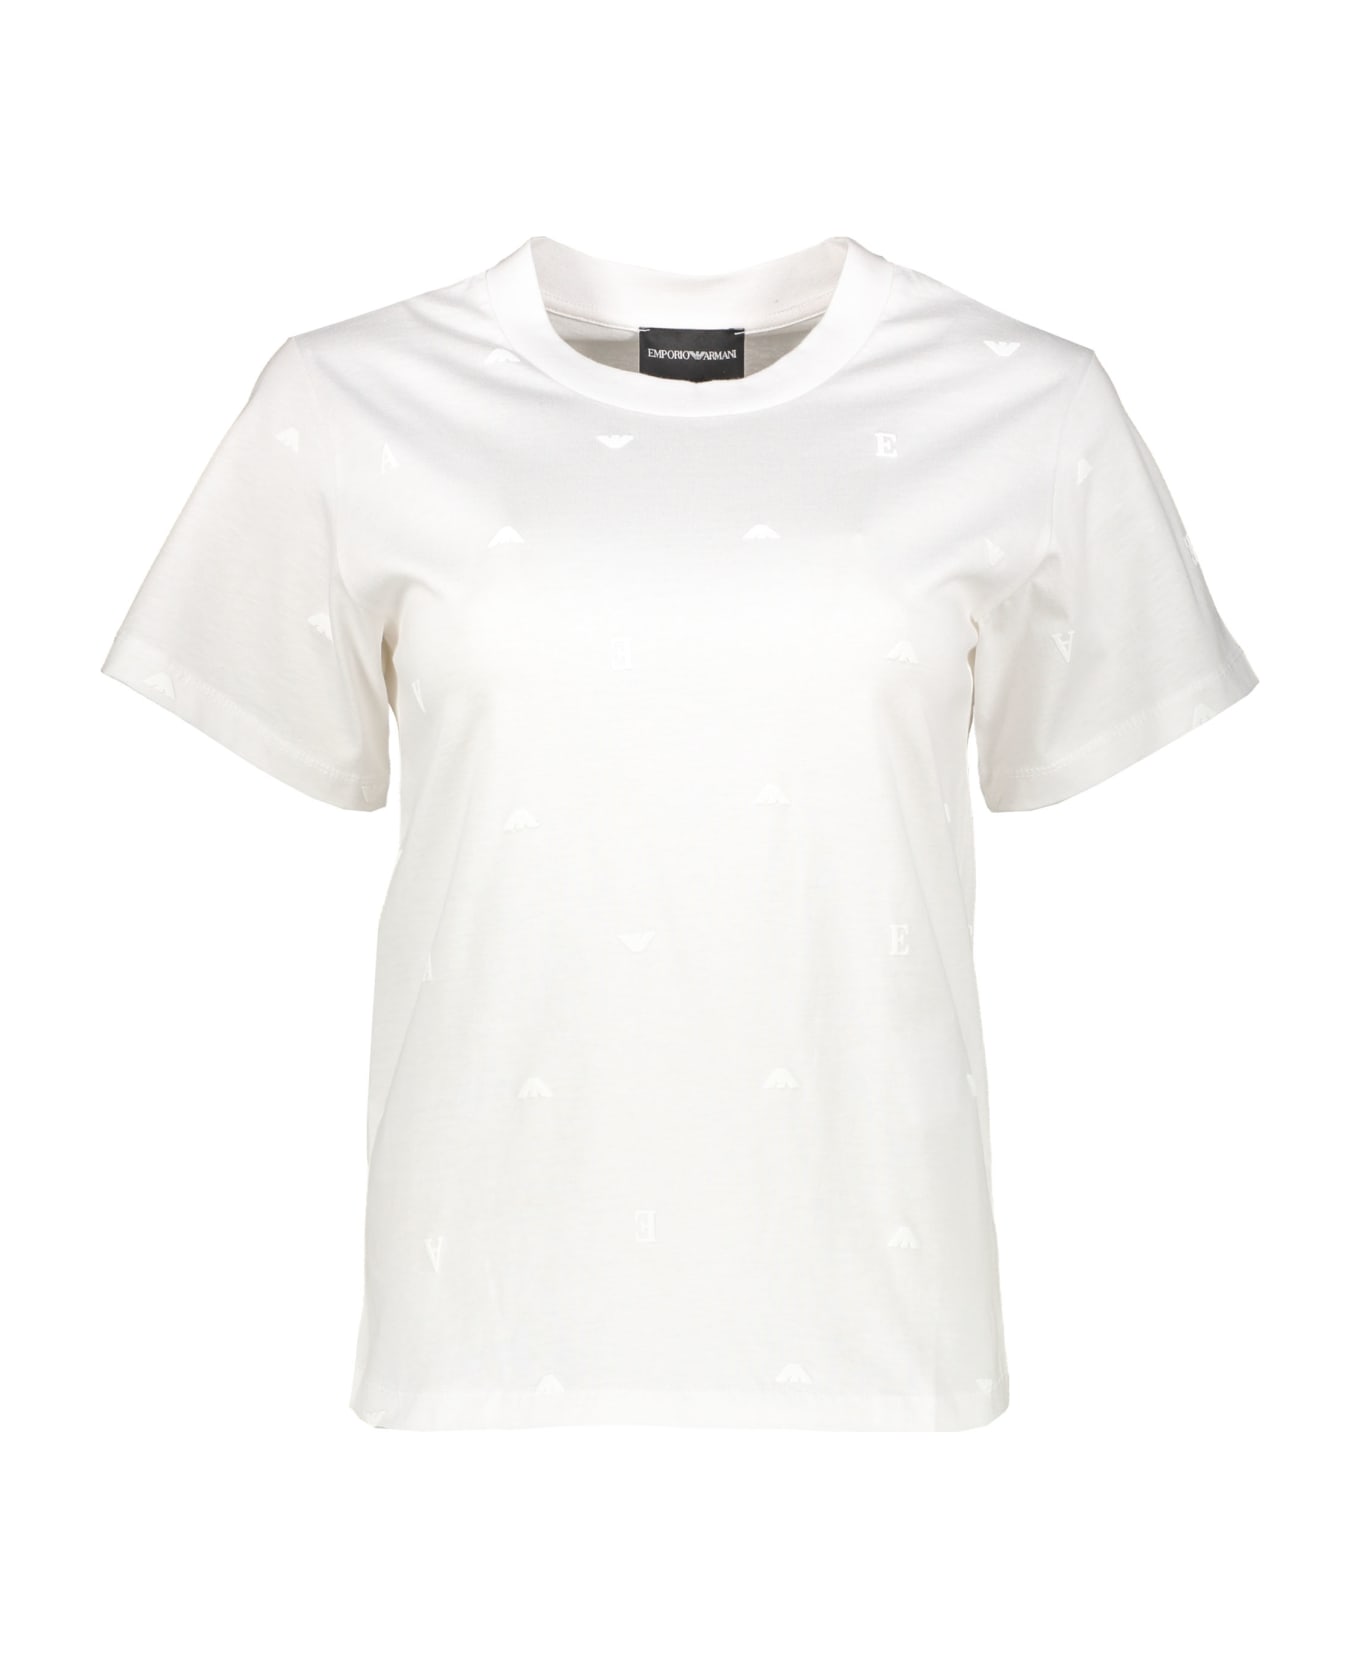 Emporio Armani Printed Cotton T-shirt - White Tシャツ